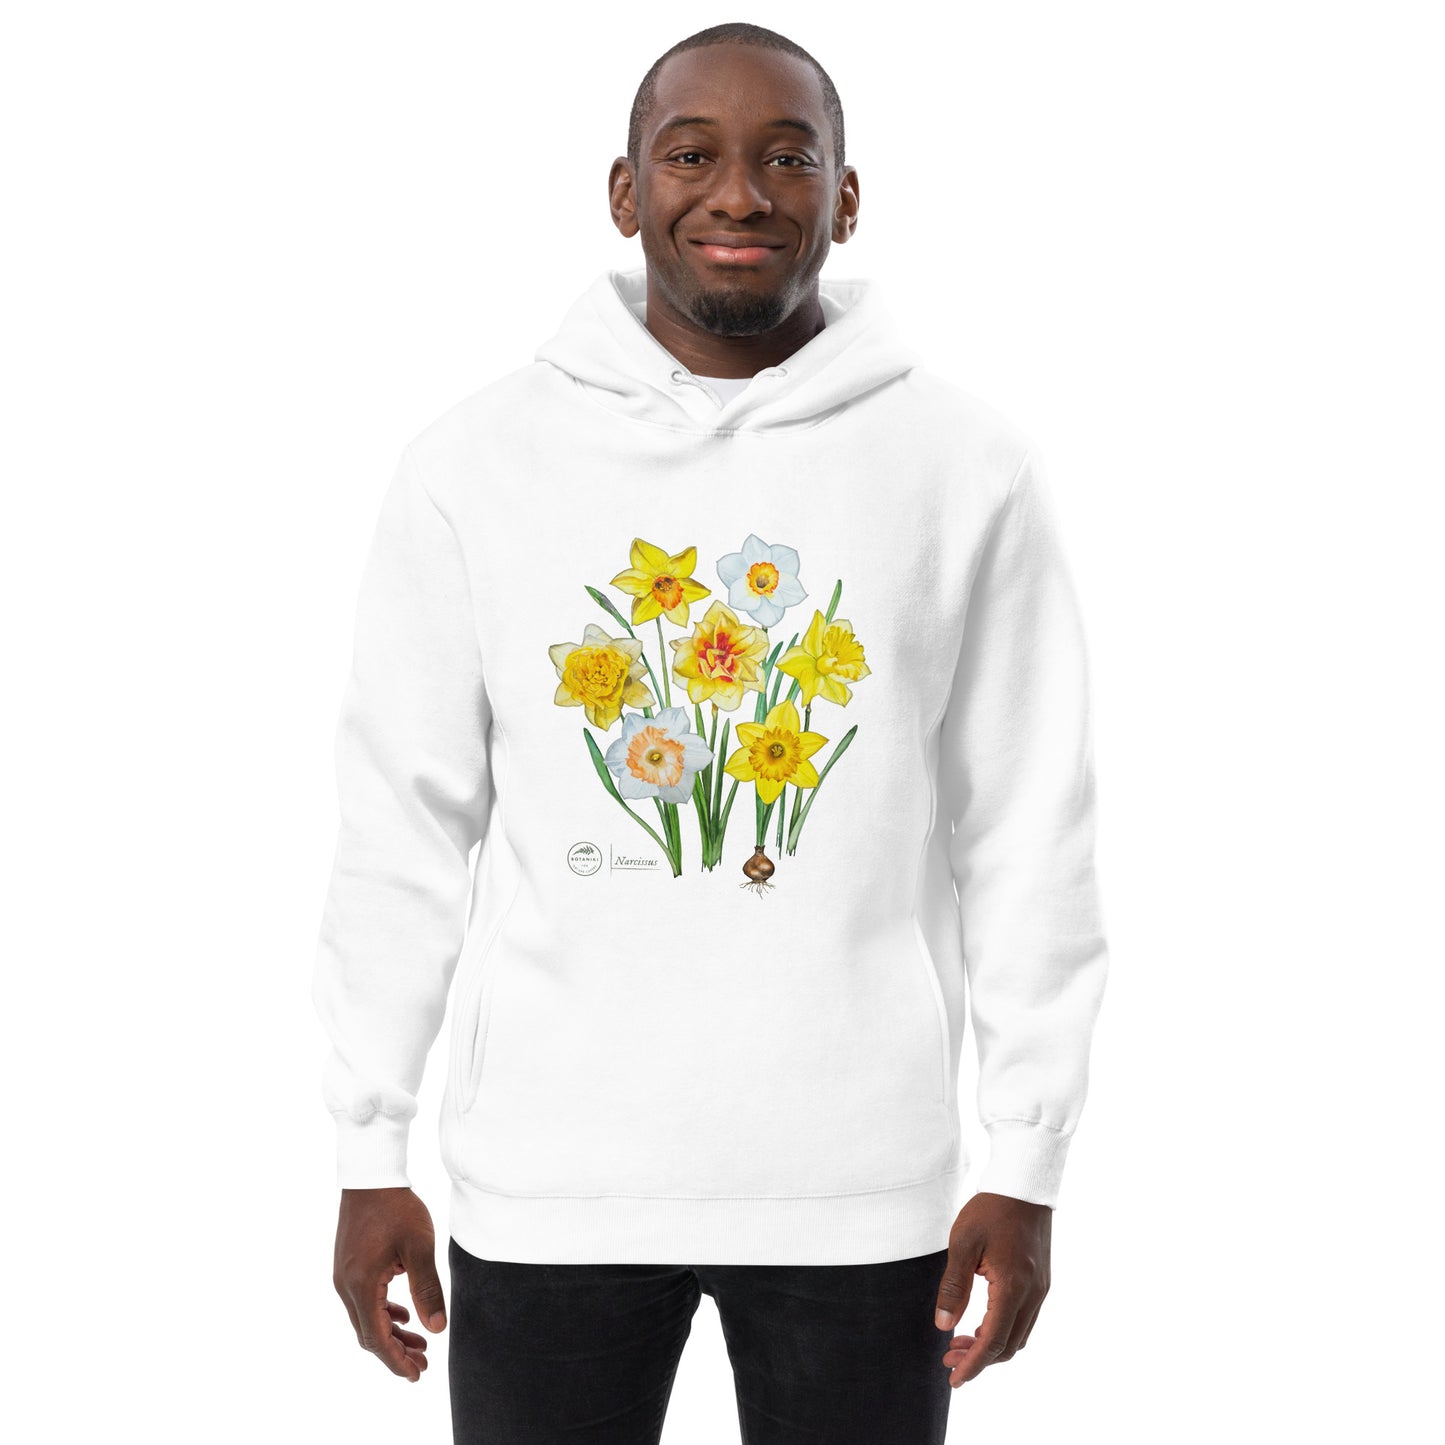 Unisex fashion hoodie - Daffodils